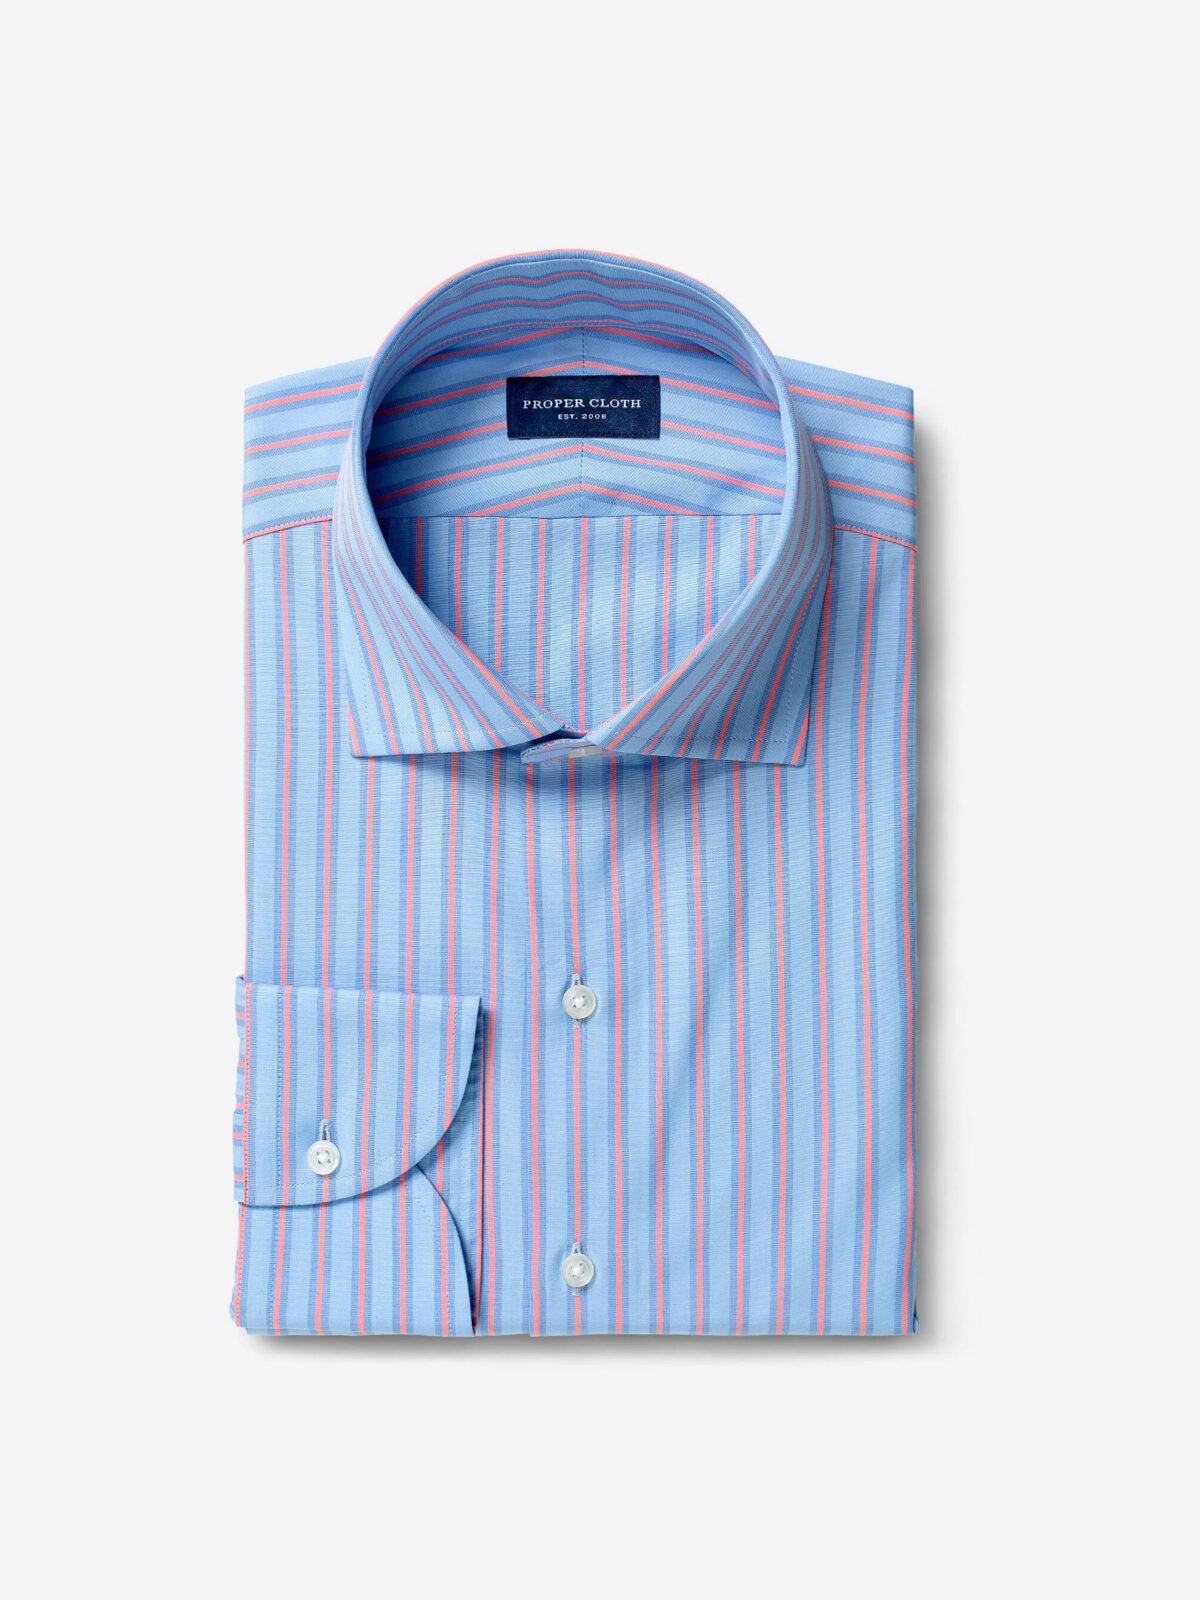 Modena Light Blue and Coral Stripe Men's Dress Shirt Shirt by Proper Cloth